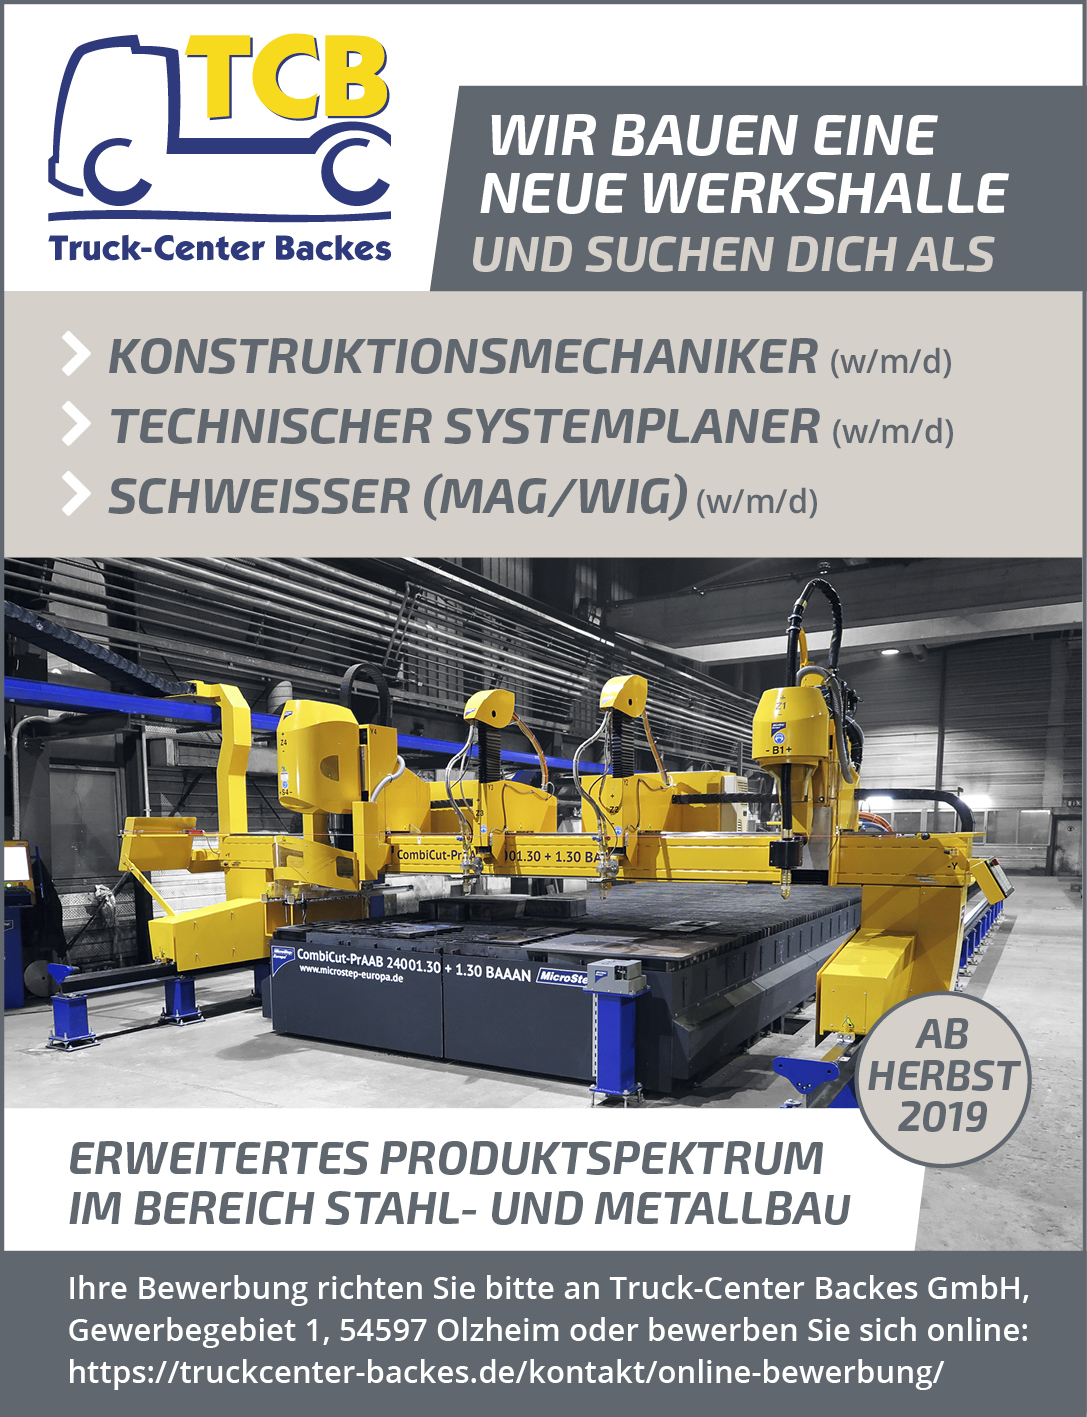 Truck-Center Backes GmbH